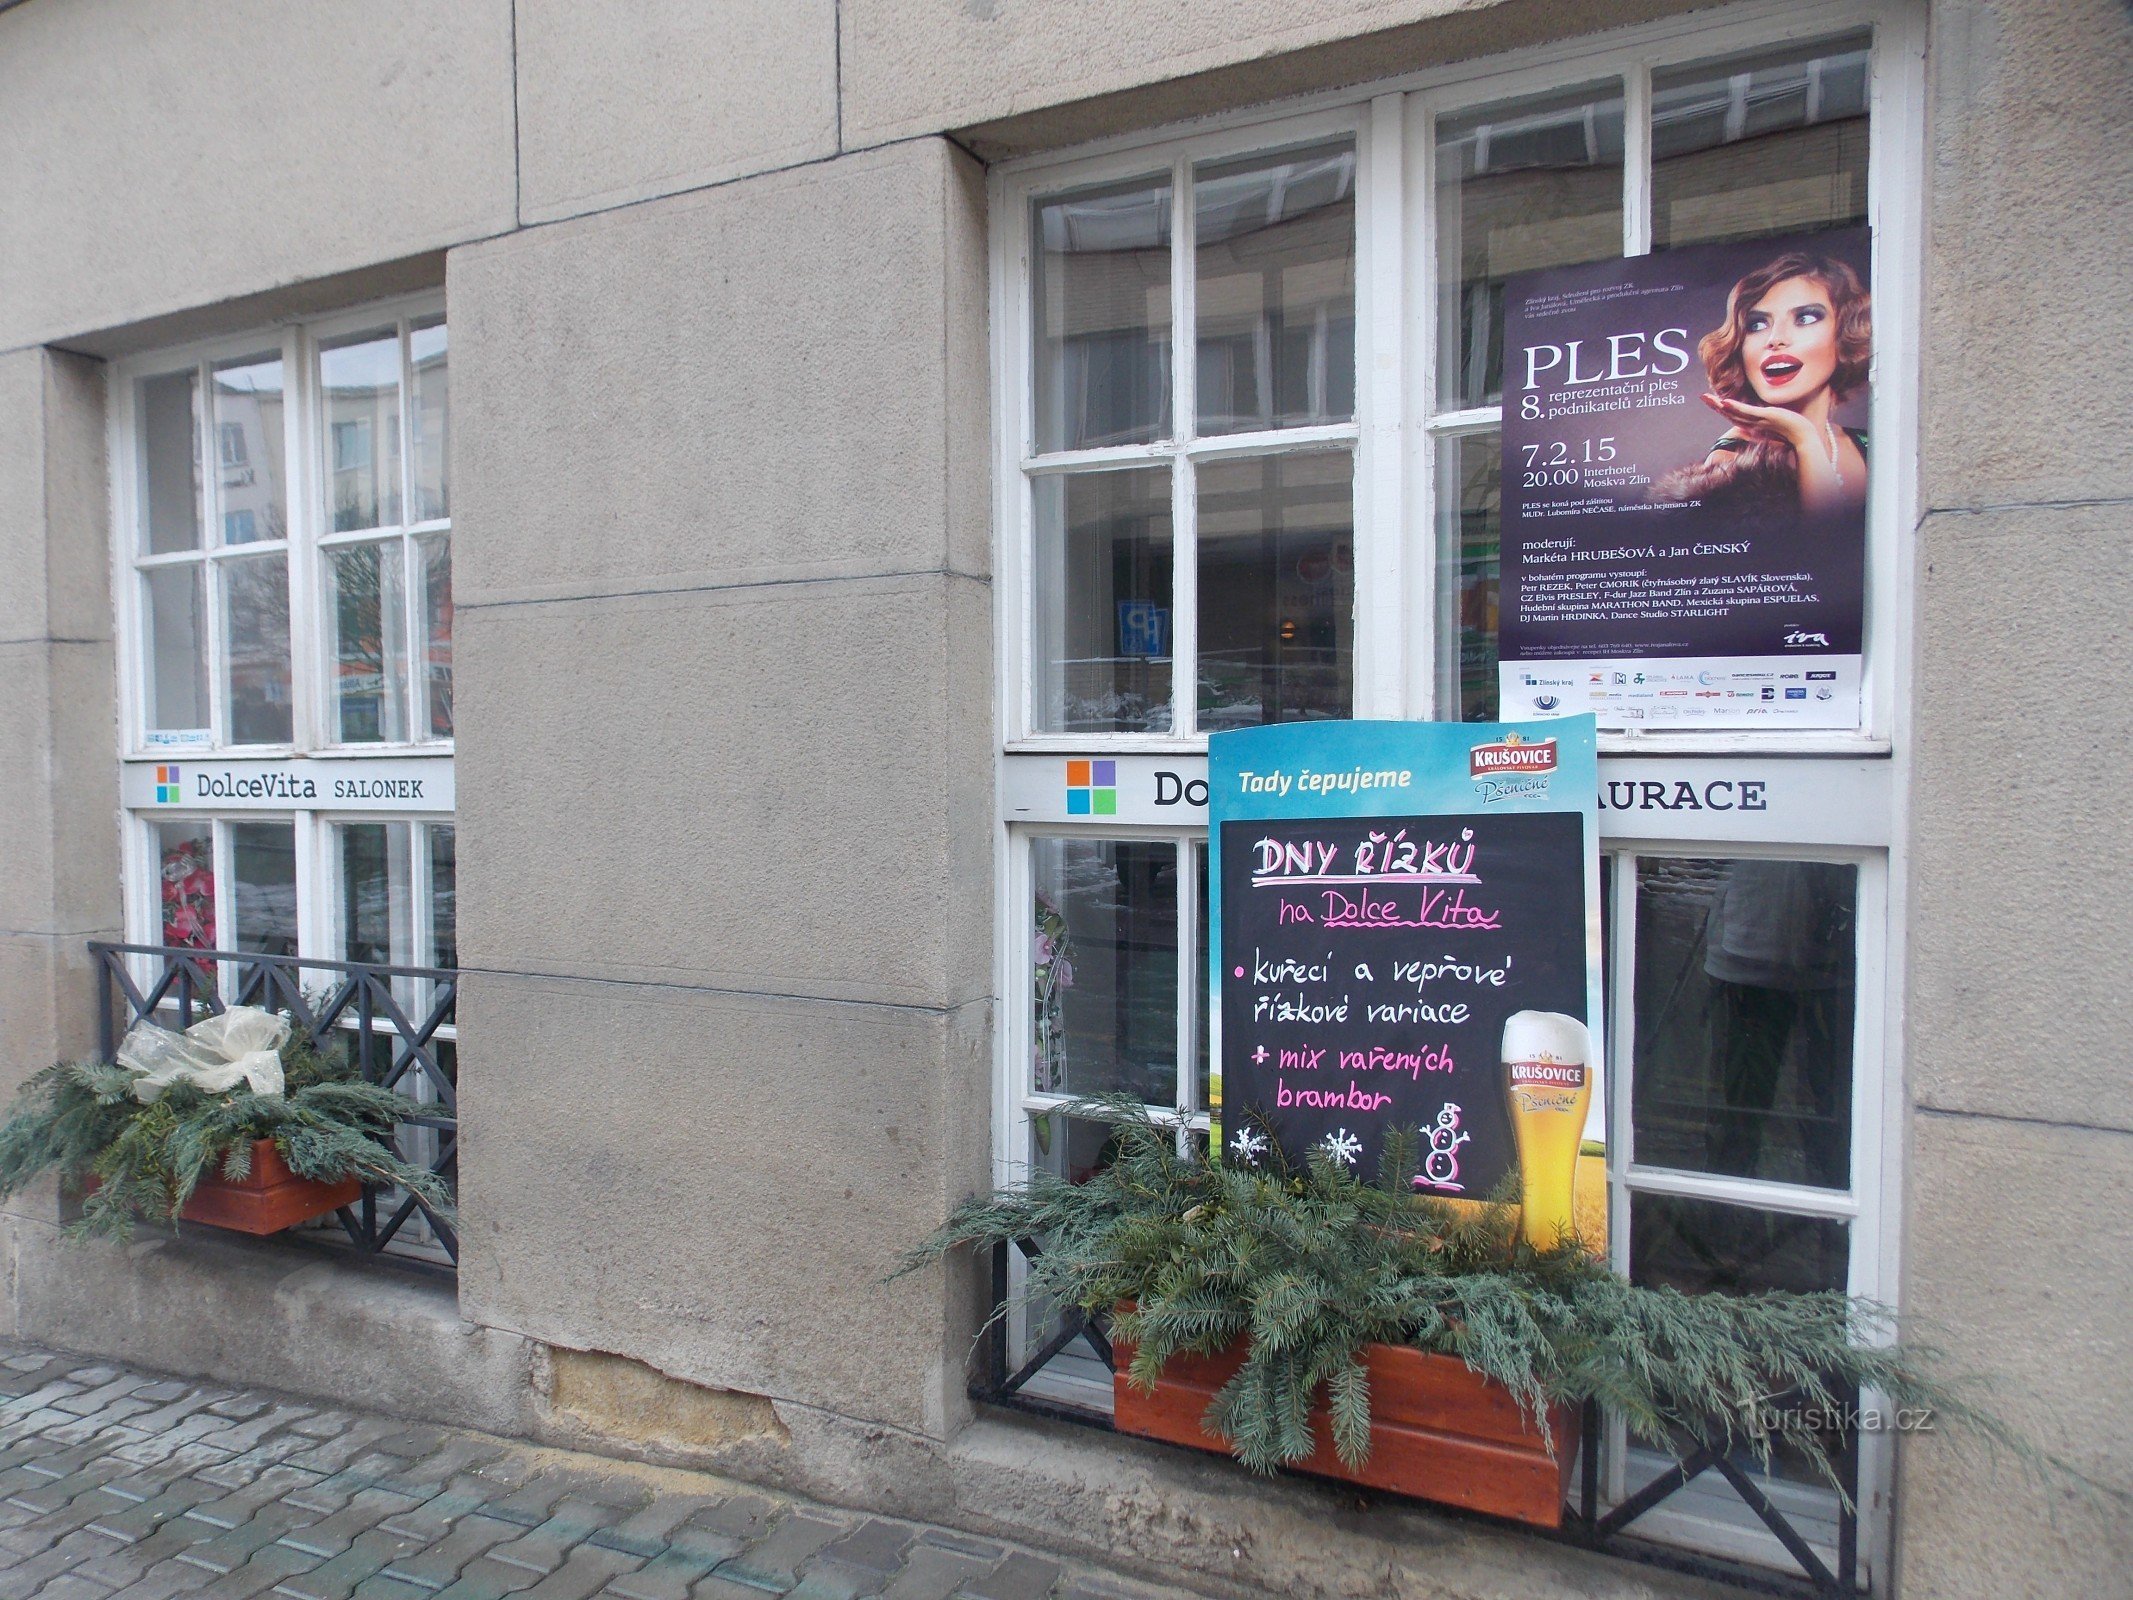 DolceVita - restaurang, café, bar med en touch av Italien i Zlín